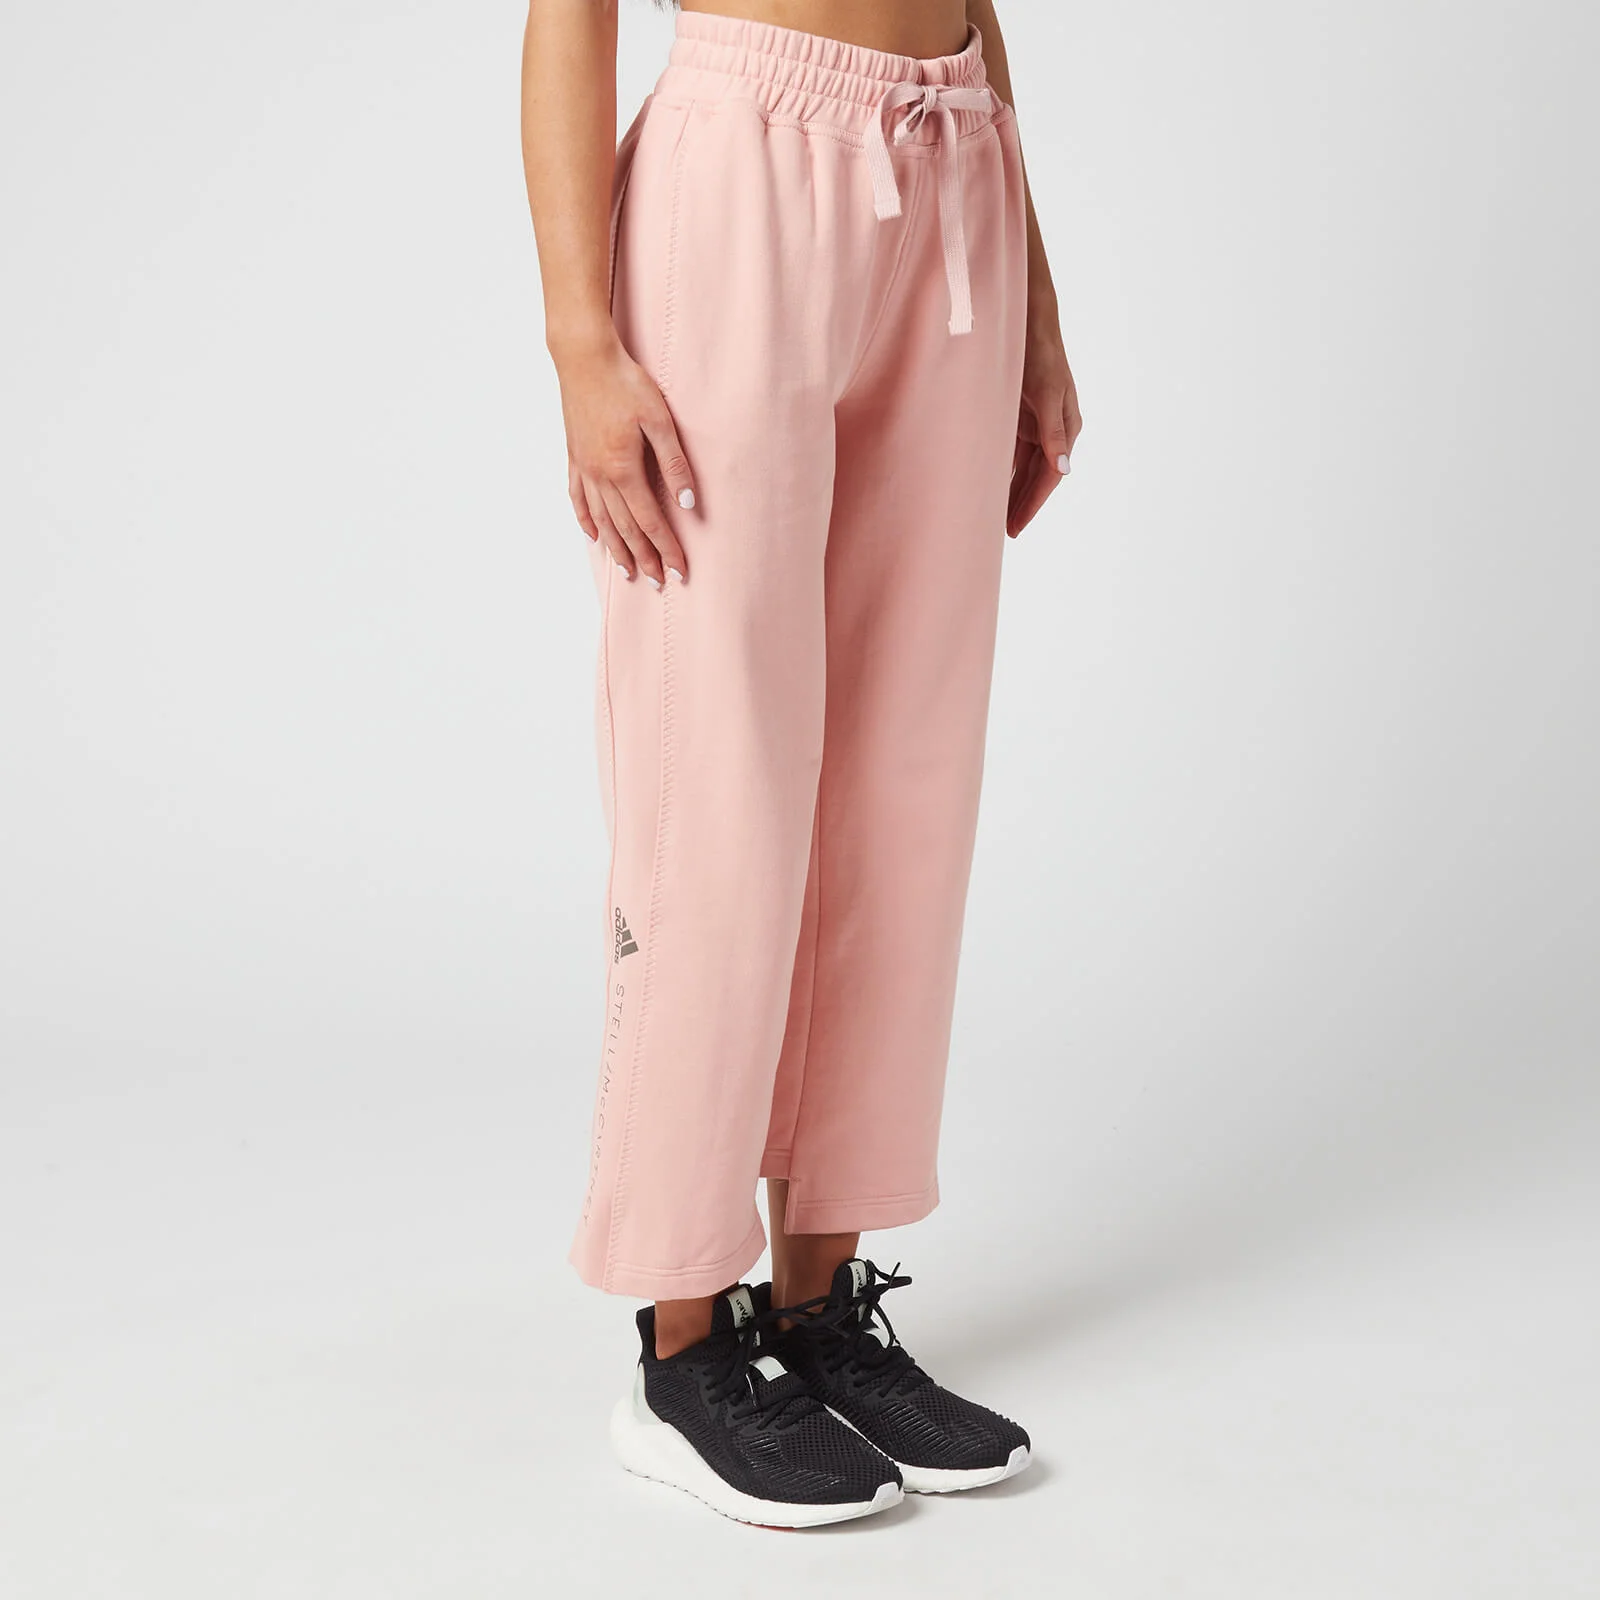 adidas by Stella McCartney Women's Essential Sweatpants - Pink Image 1